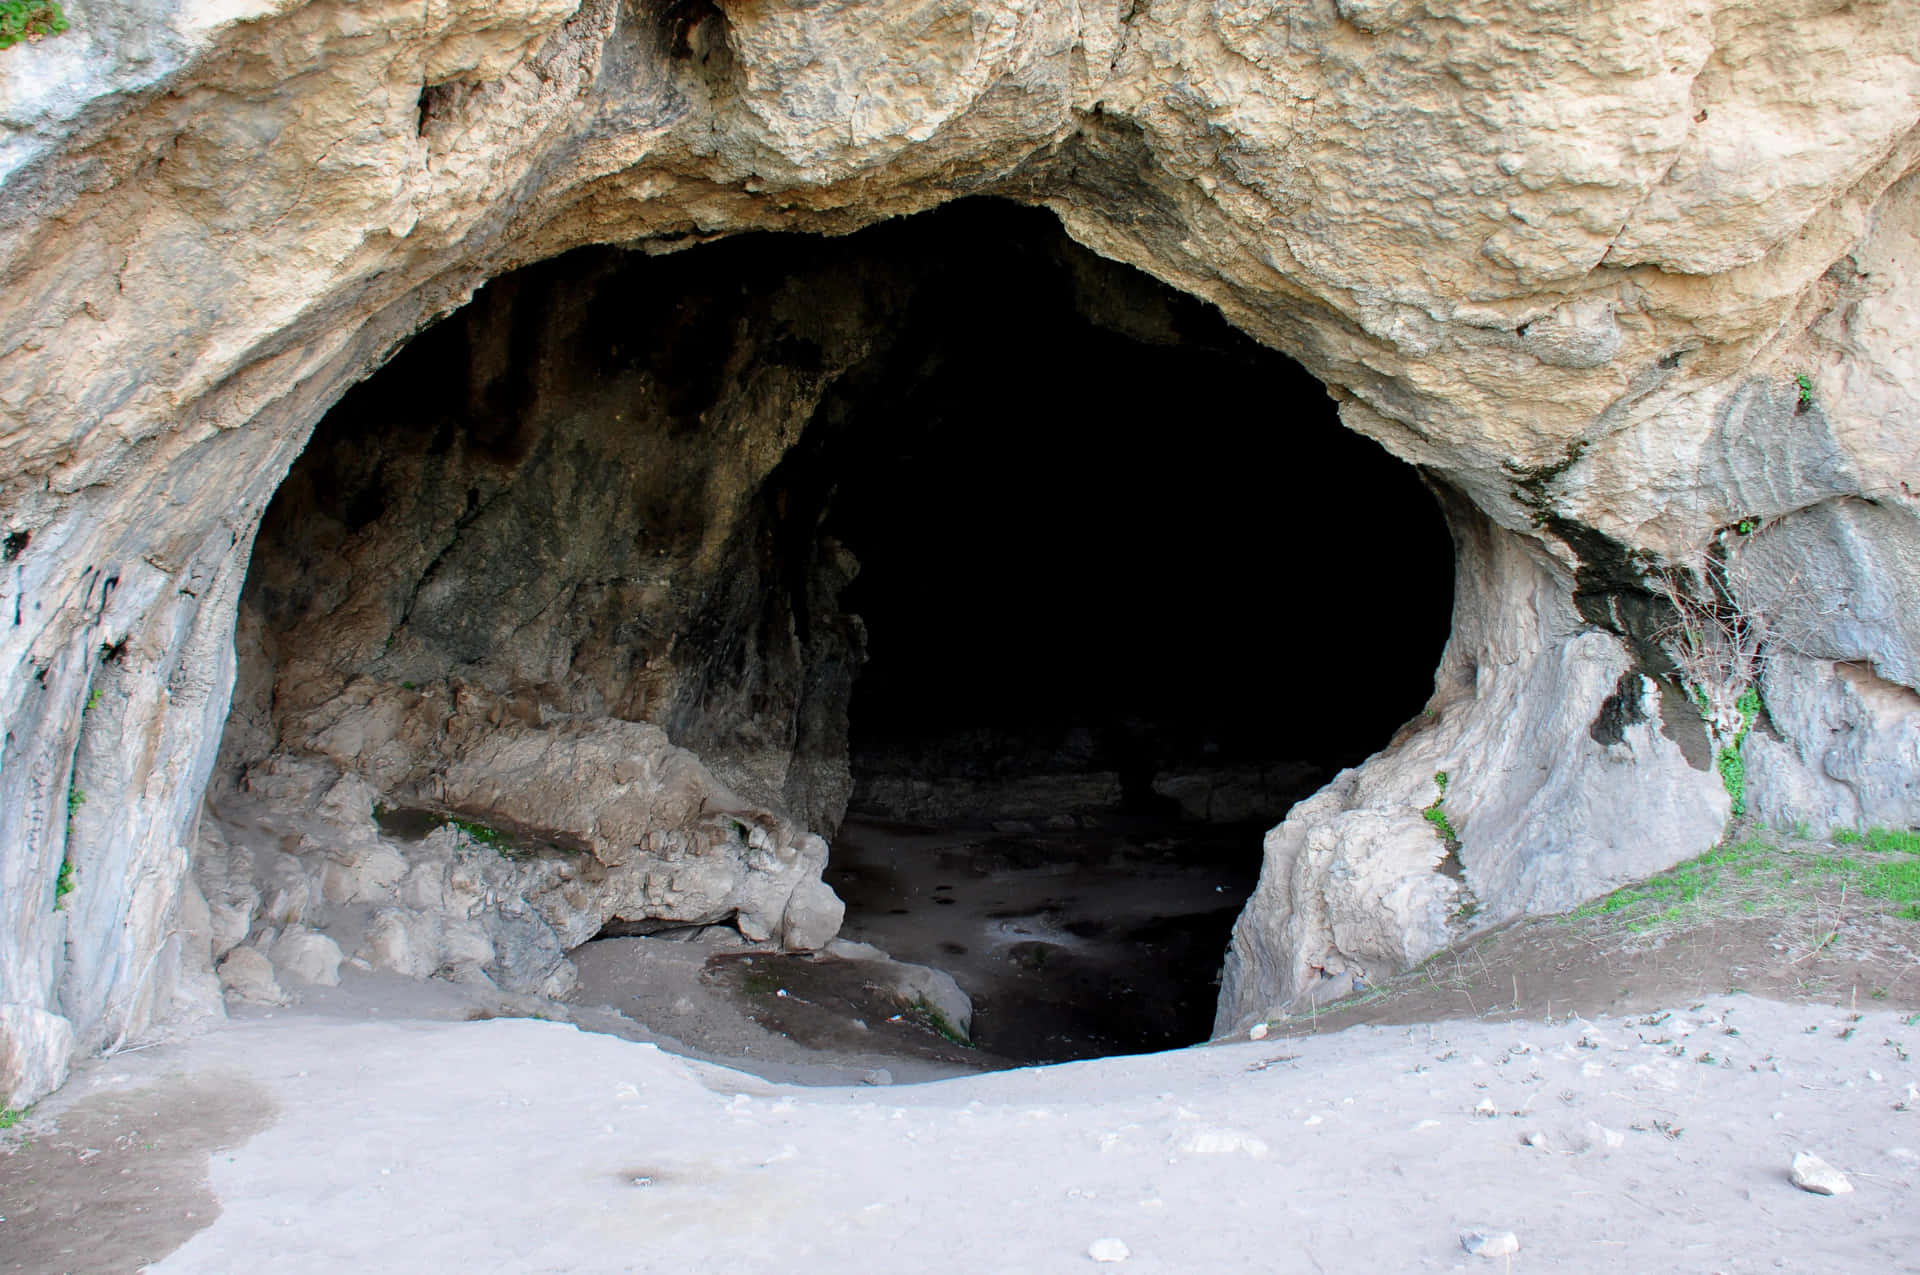 Höhle4288 X 2848 Bild